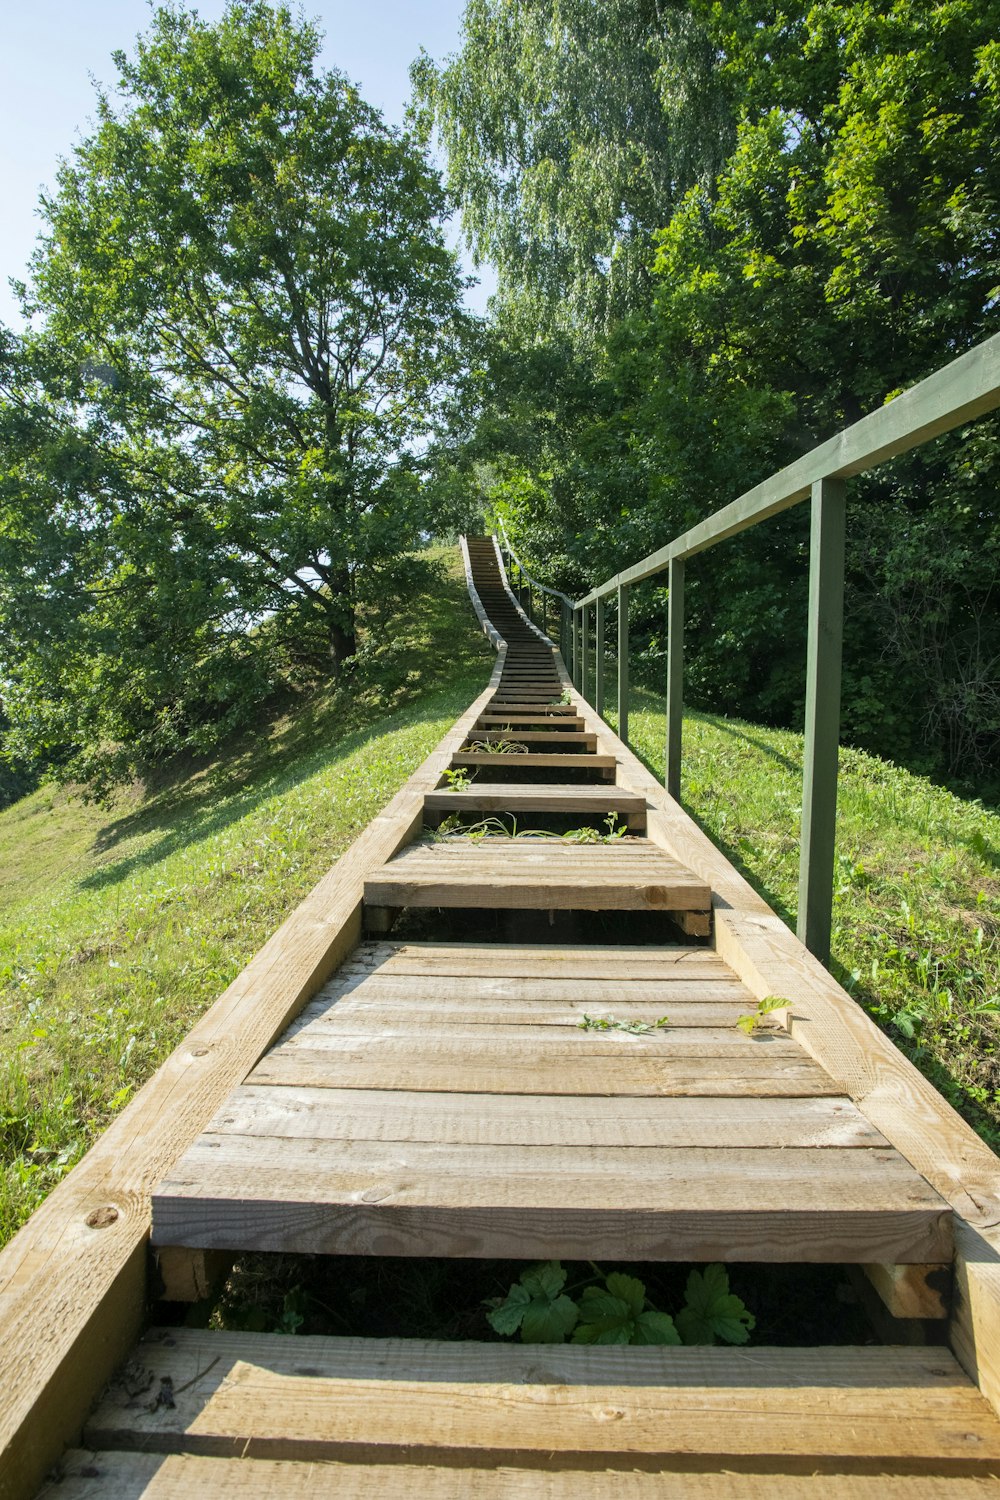 a wooden bridge over a grassy area